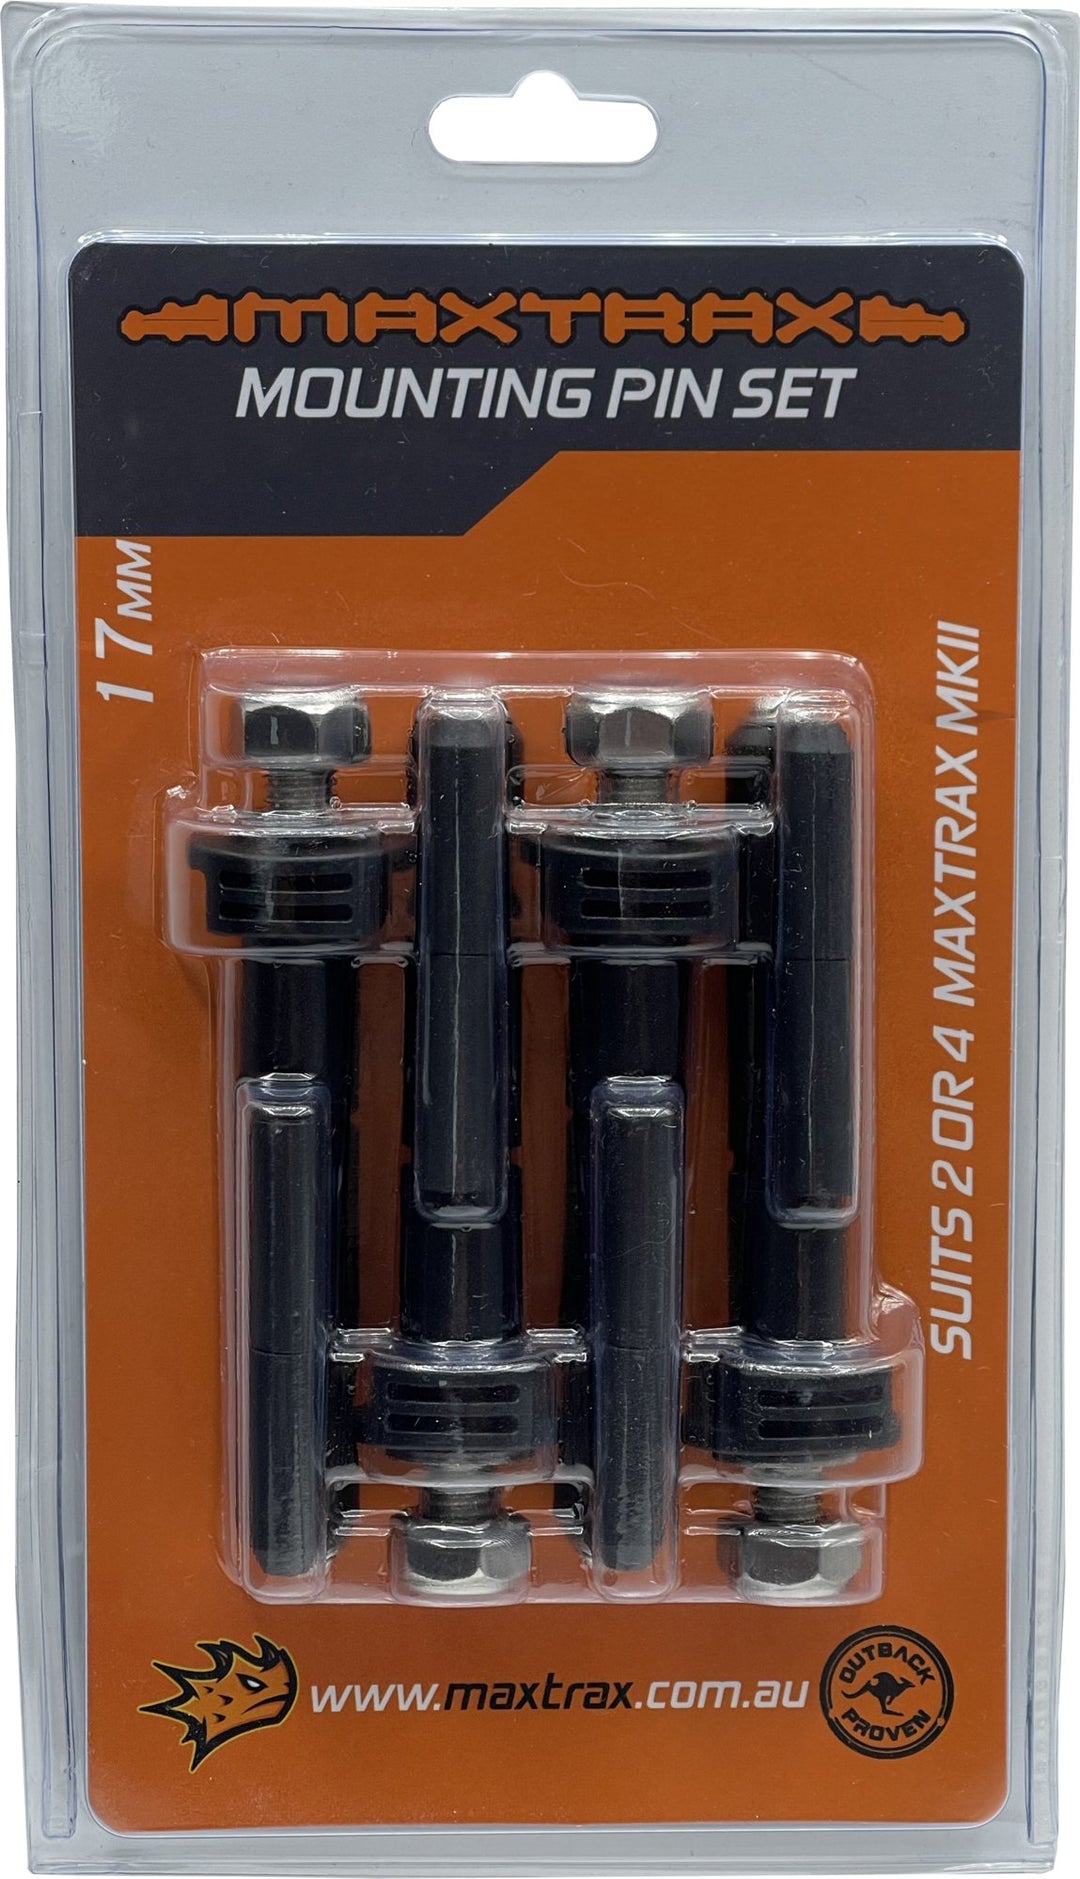 MAXTRAX Mounting Pin Set 17mm - Holds 2 or 4x MKII - Maxtrax - MTXMPS17 -Caravan World Australia